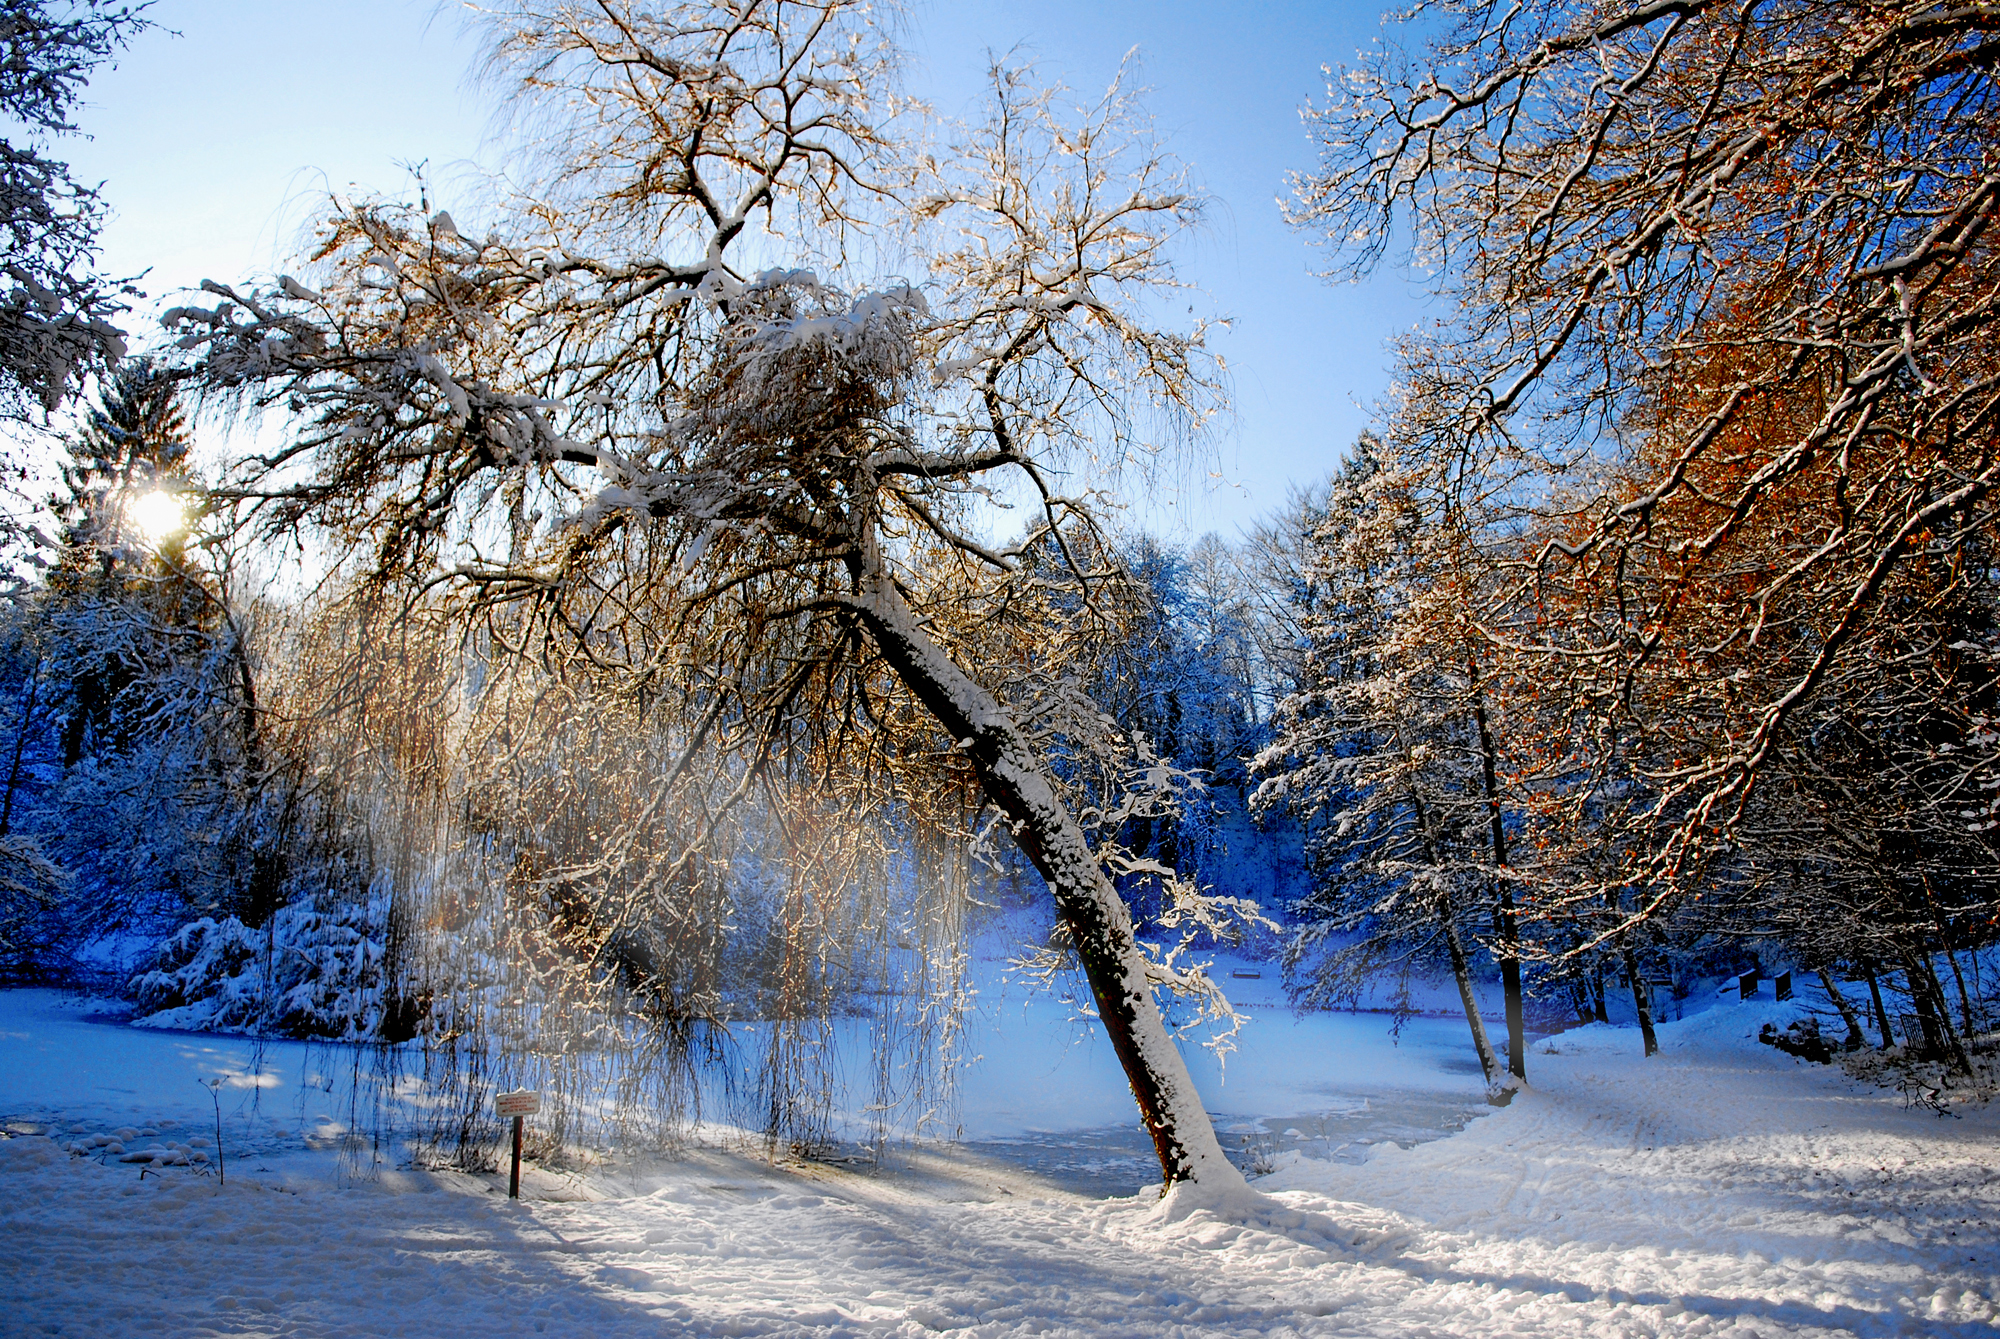 Картинка зимний период. Зима пейзаж. Зима в лесу. Красивая зима. Красивая зимняя природа.